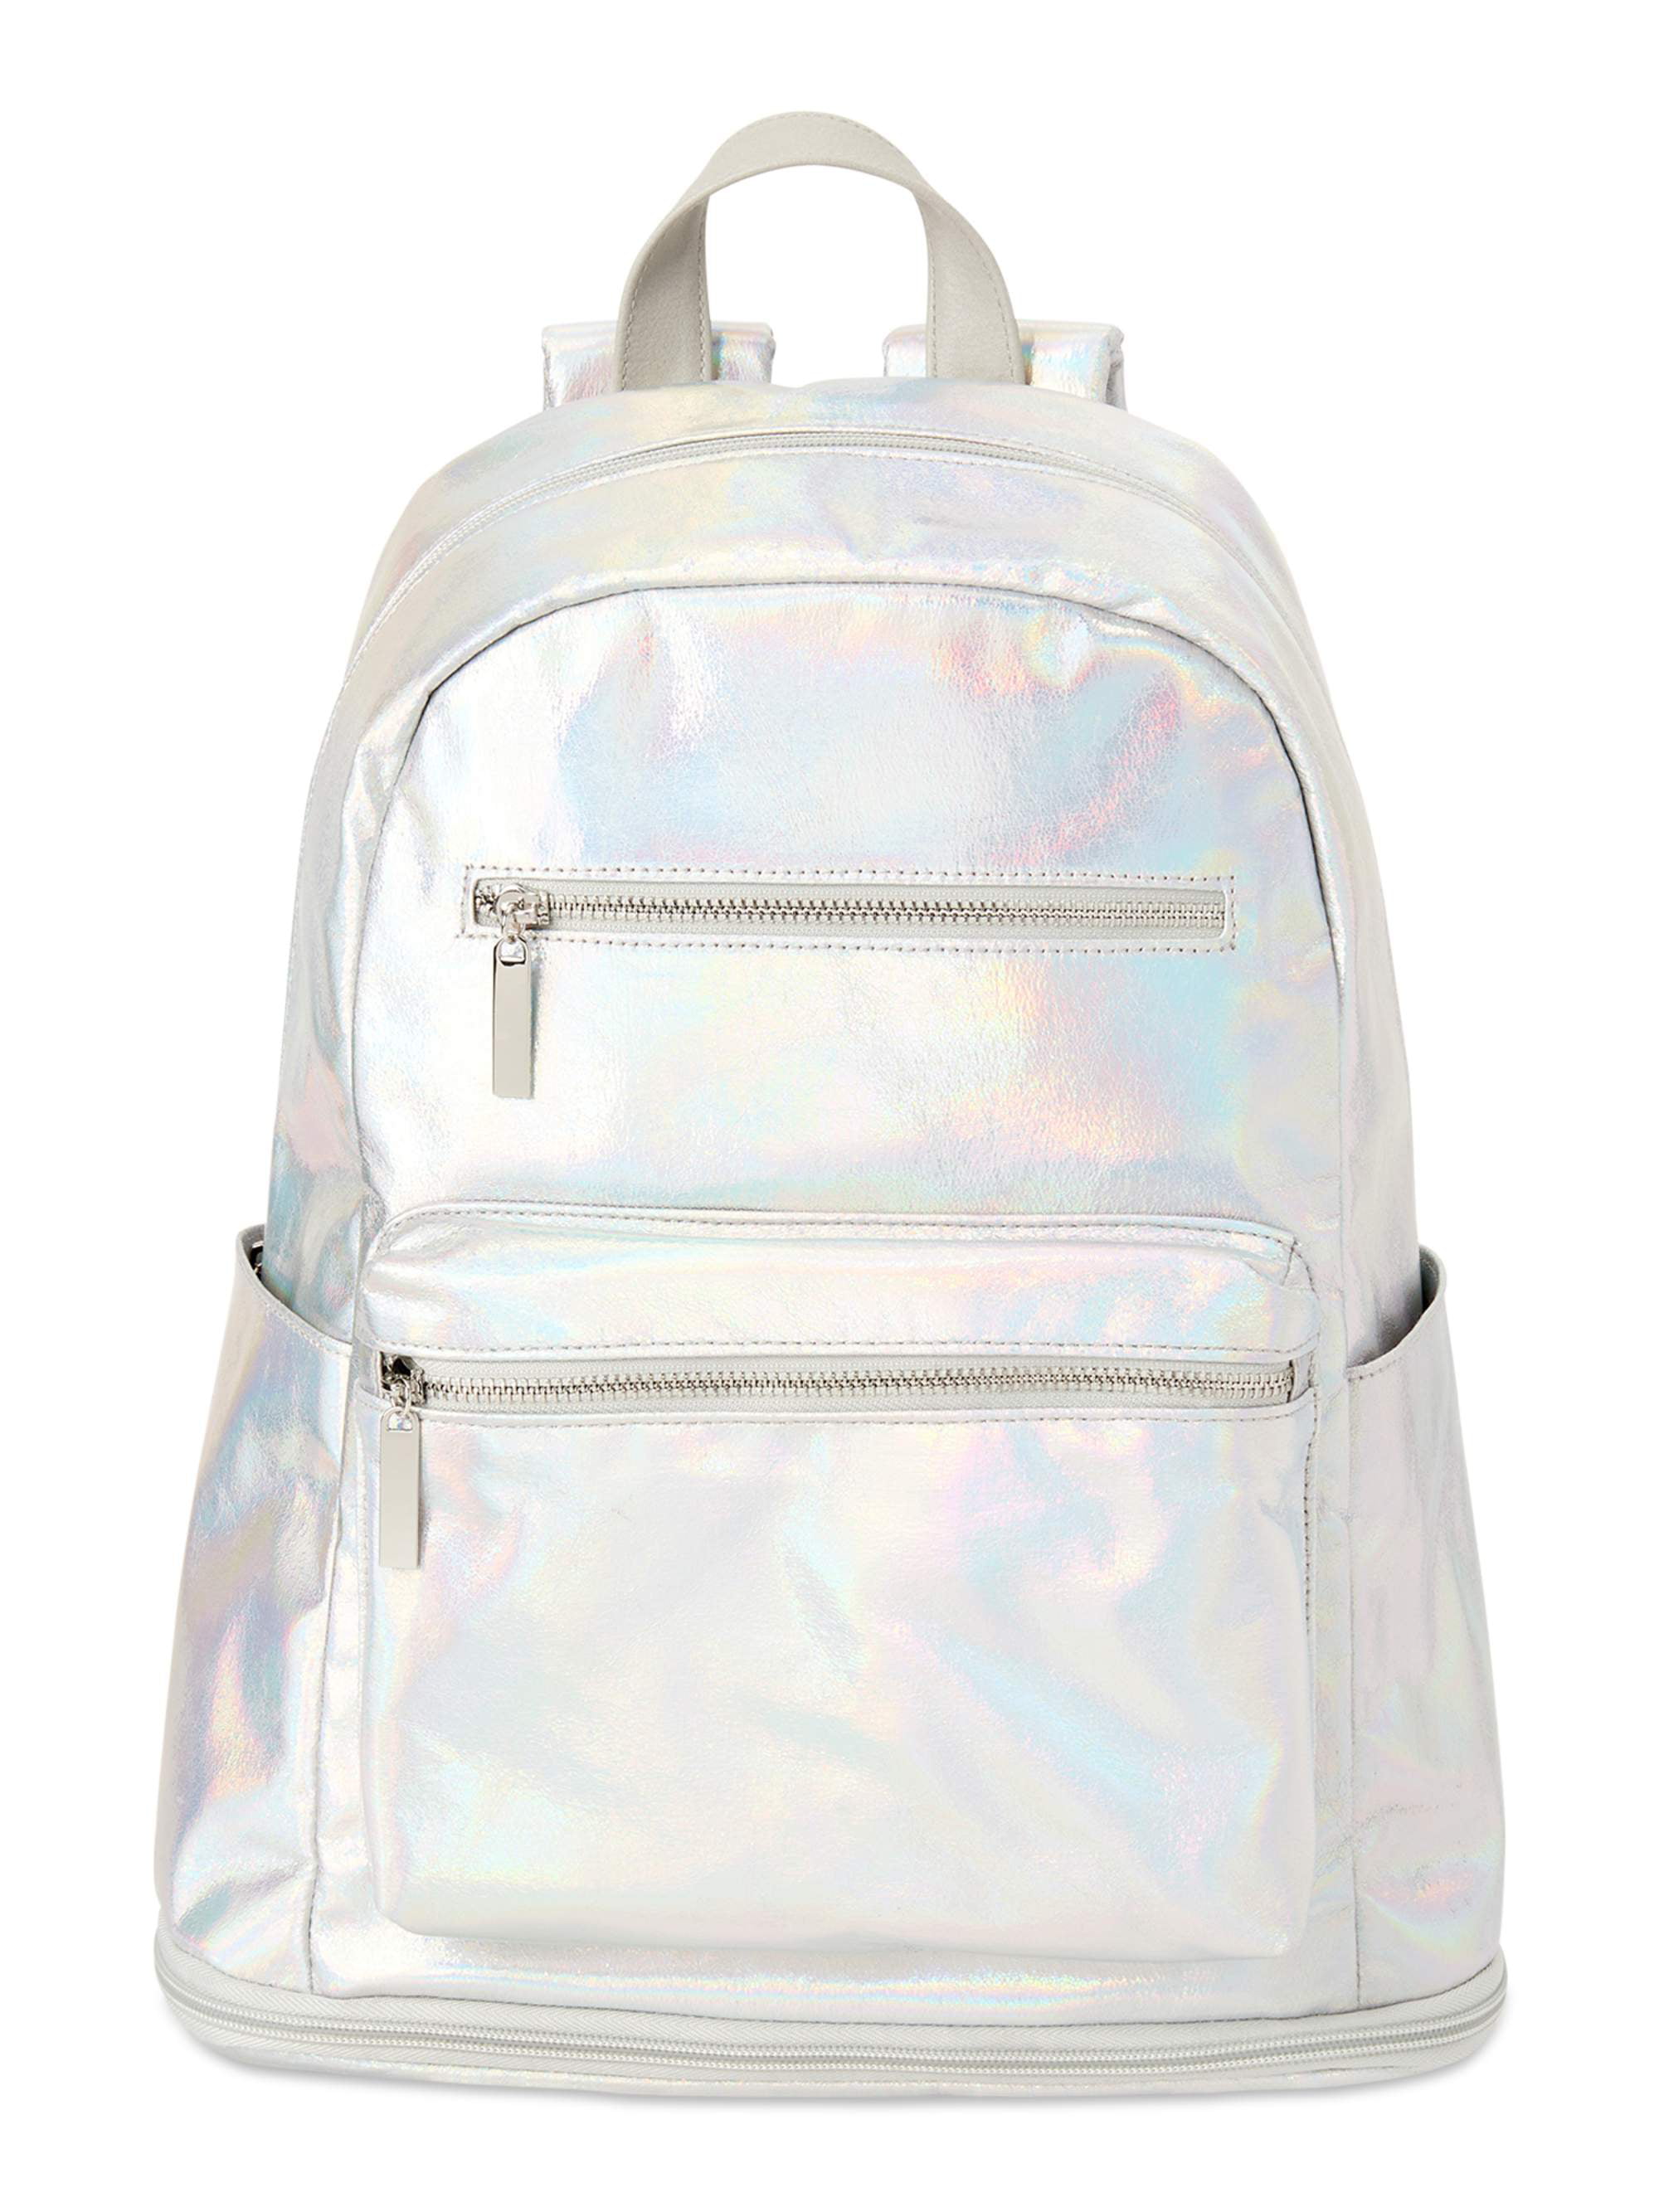 Grass Ears Scratchy Bookbag School Backpack Luggage Travel Sport Bag 